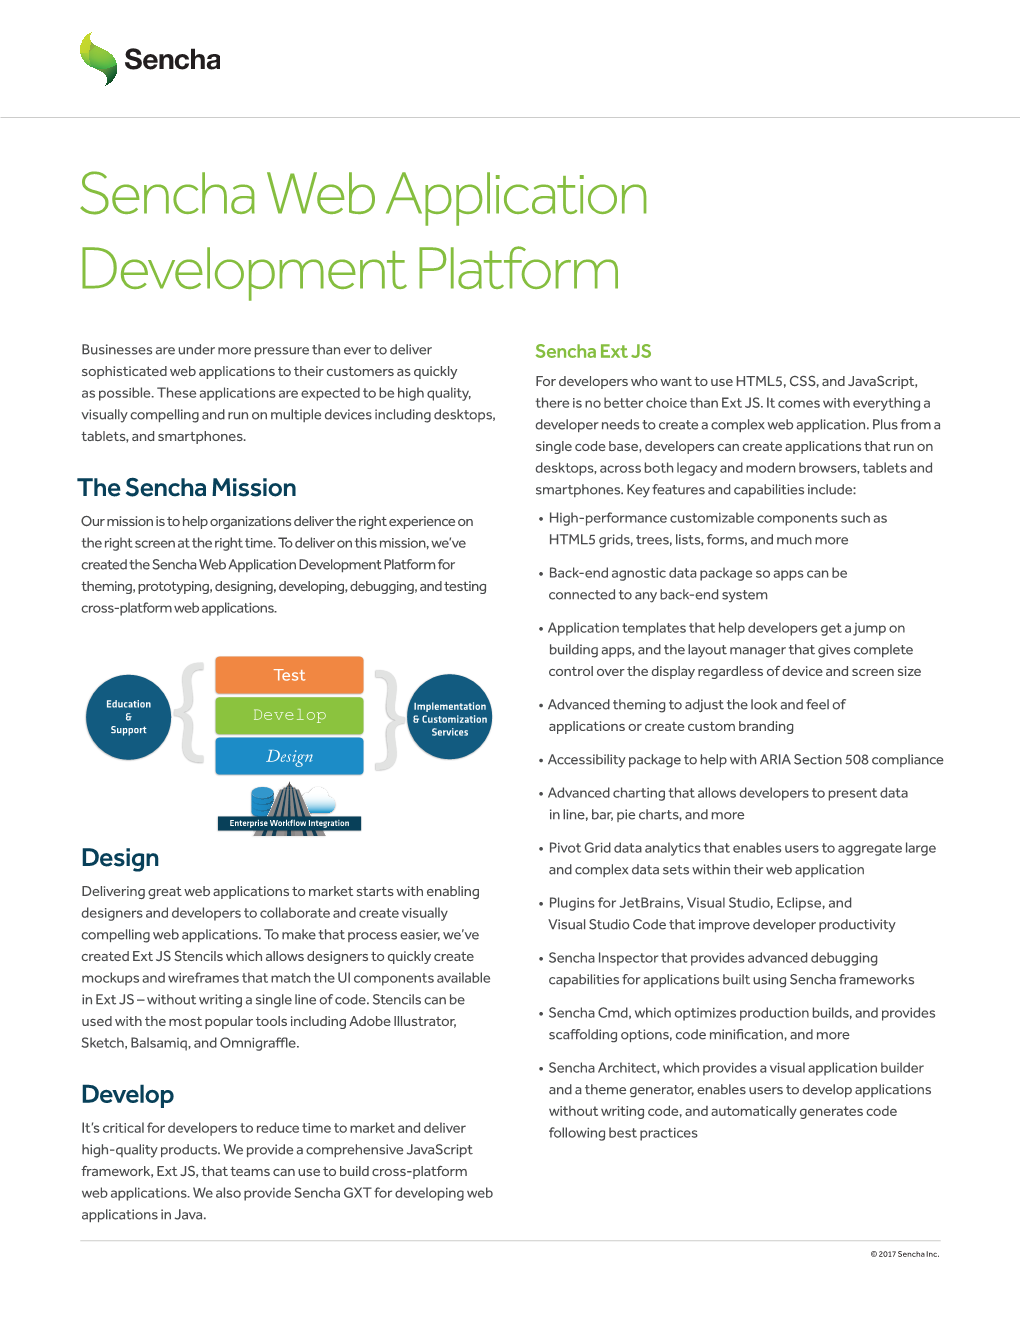 Sencha Web Application Development Platform